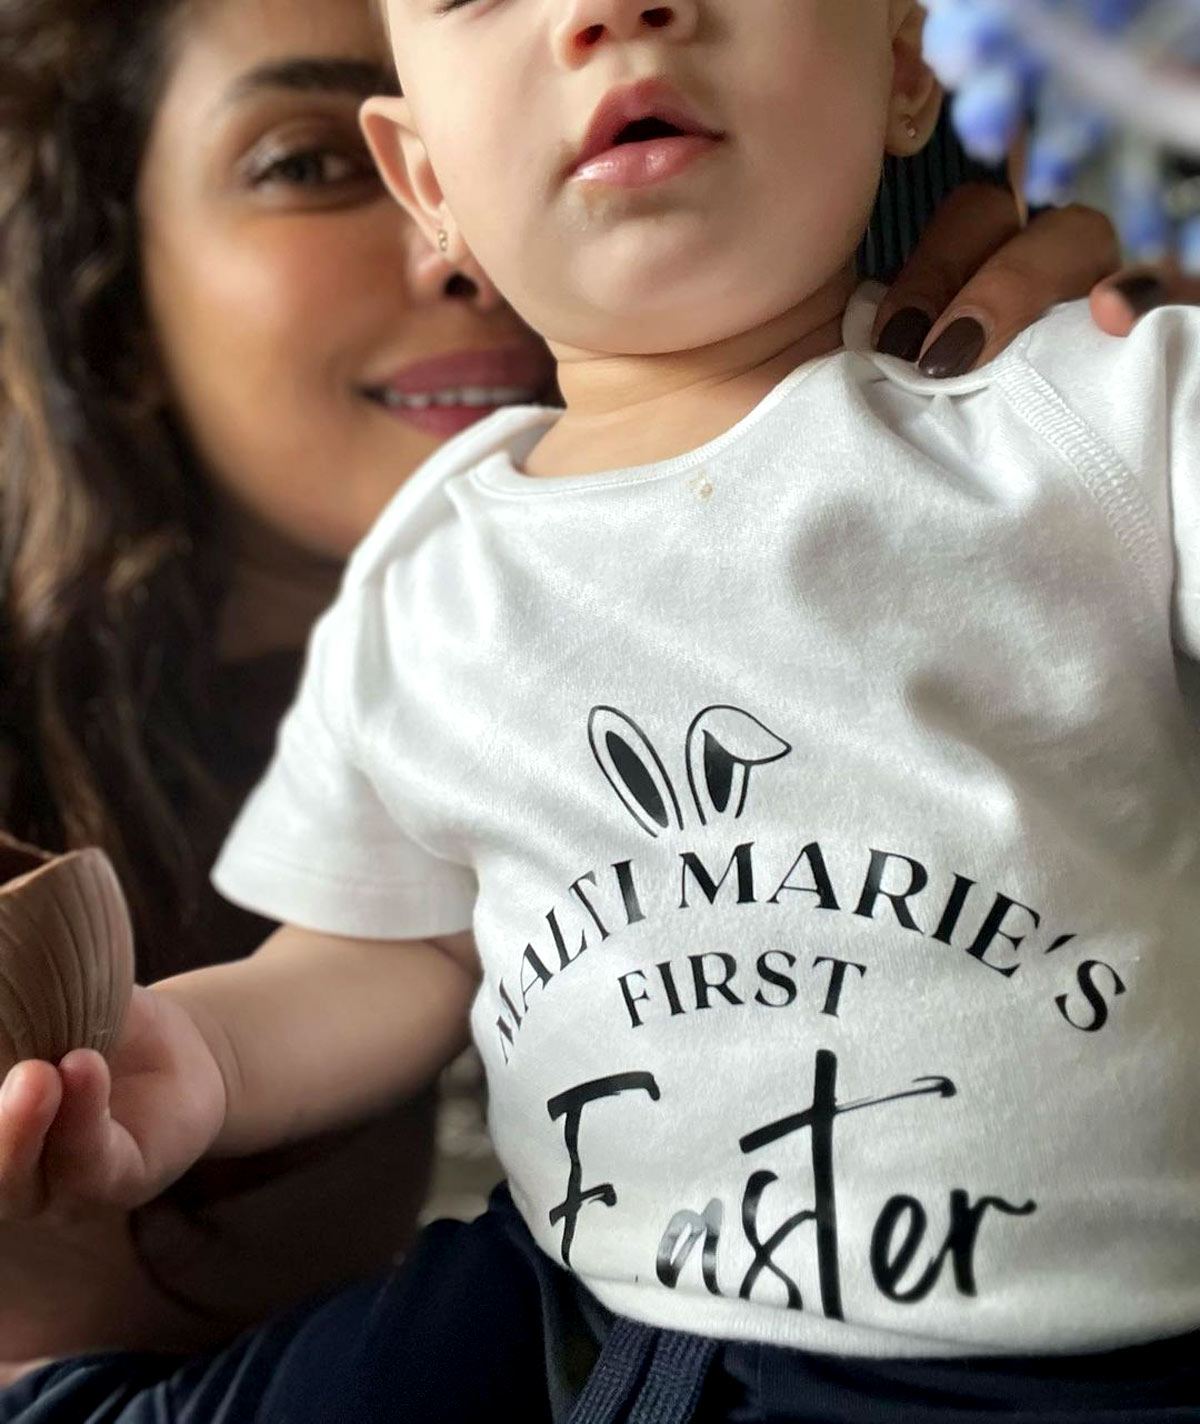 Priyanka’s Daughter Celebrates Her First Easter